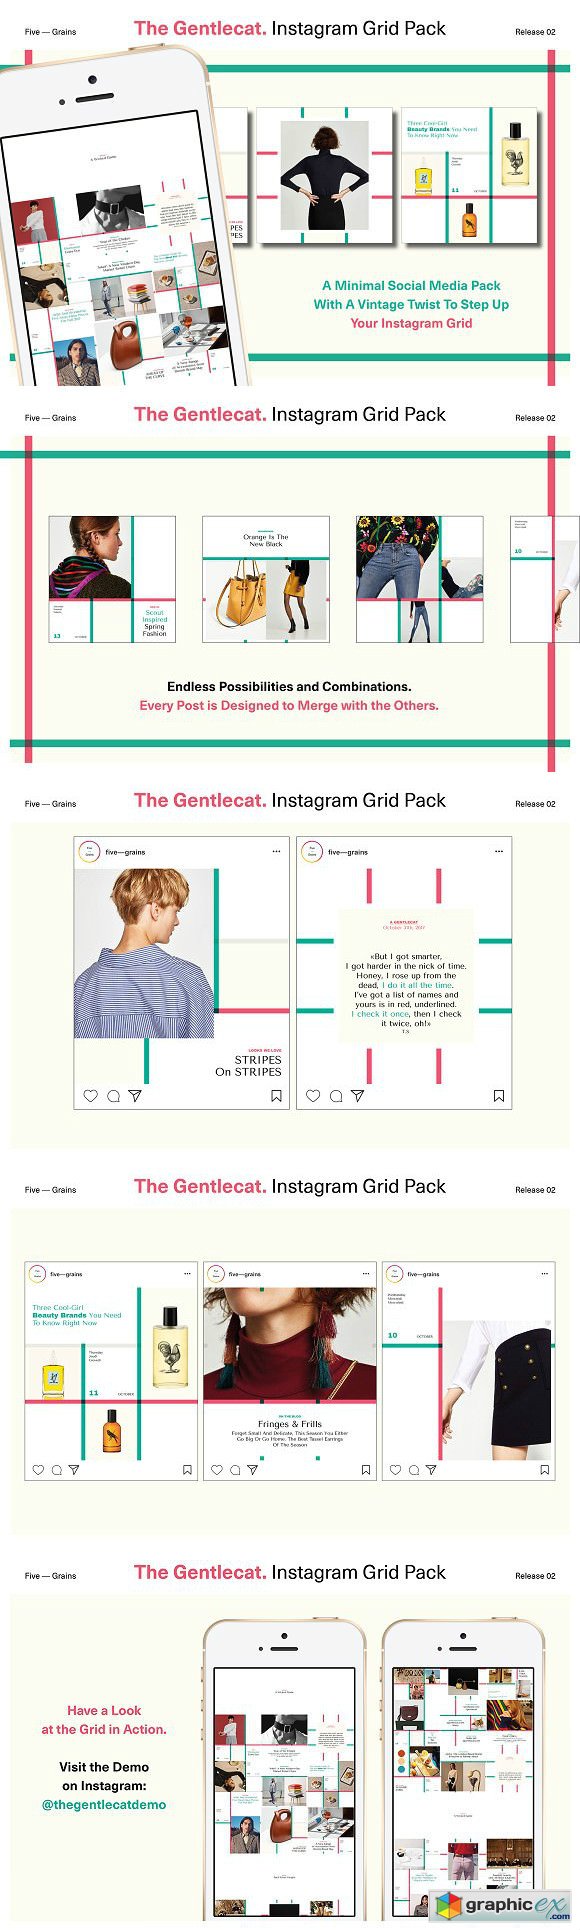 The Gentlecat Instagram Grid Pack